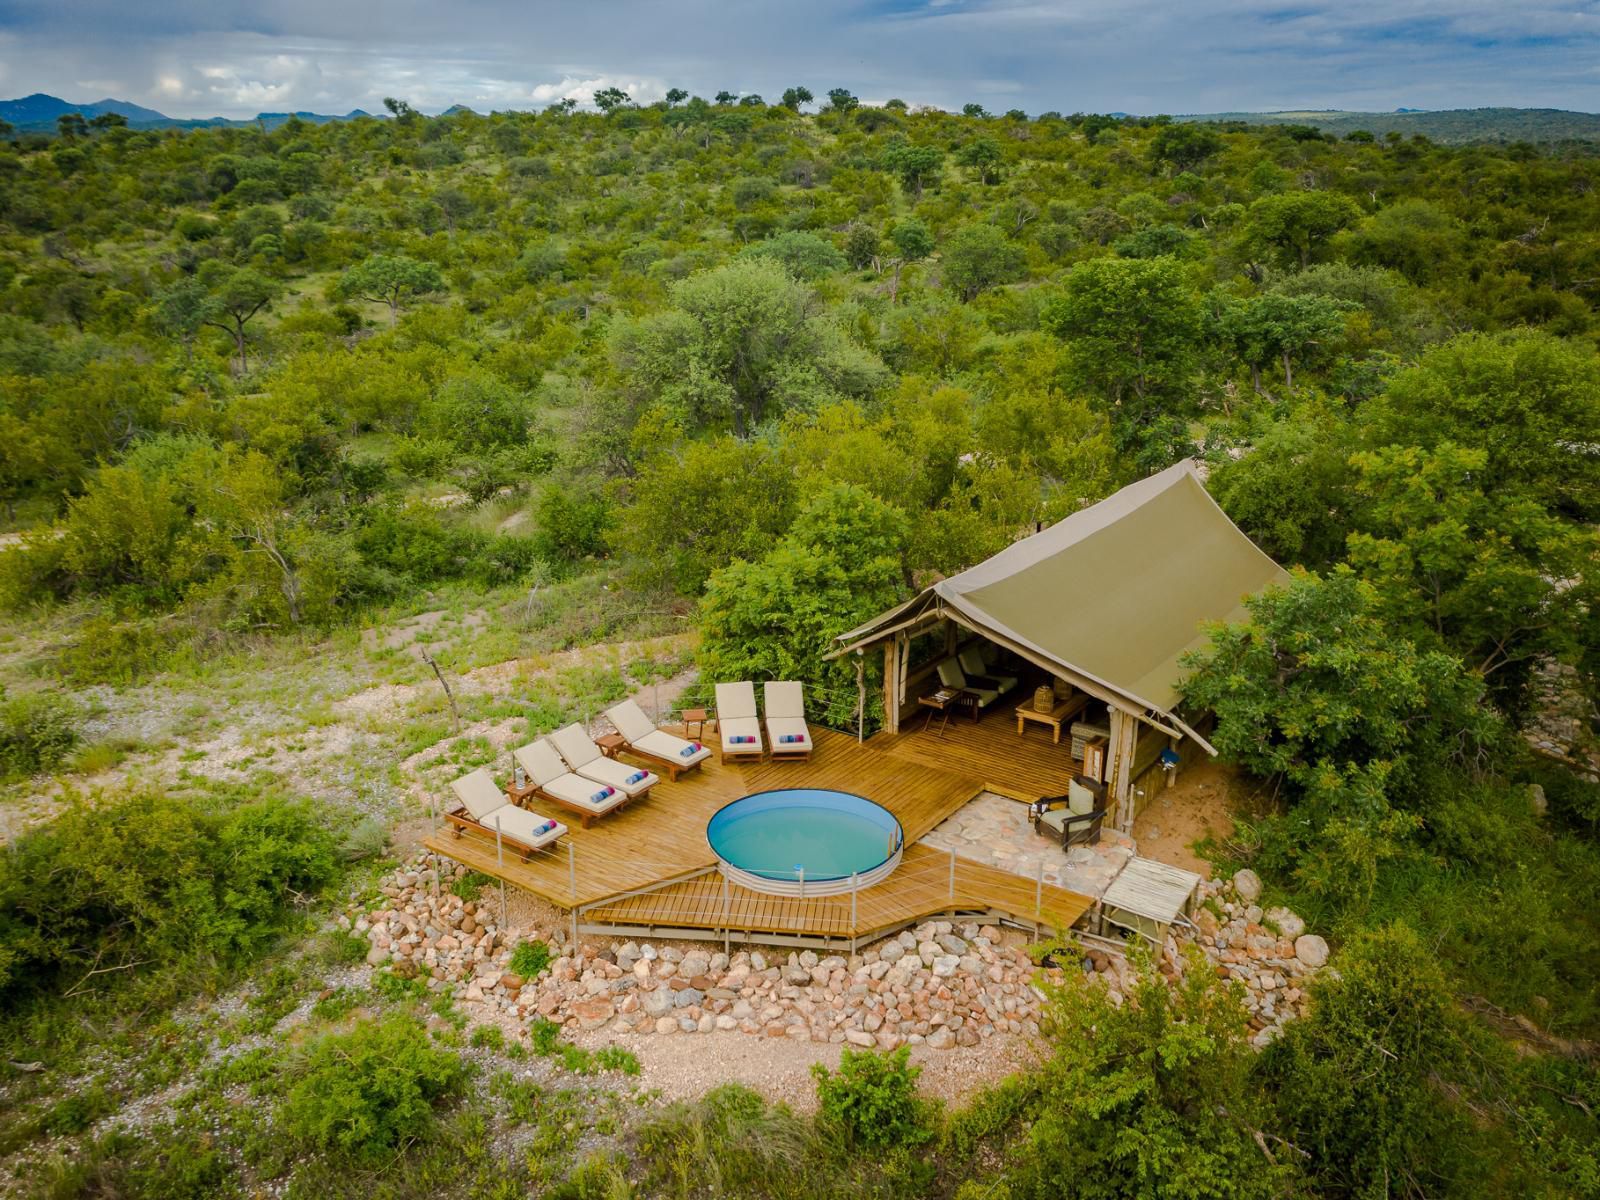 Bundox Explorer Camp Olifants Mpumalanga South Africa Colorful, Swimming Pool